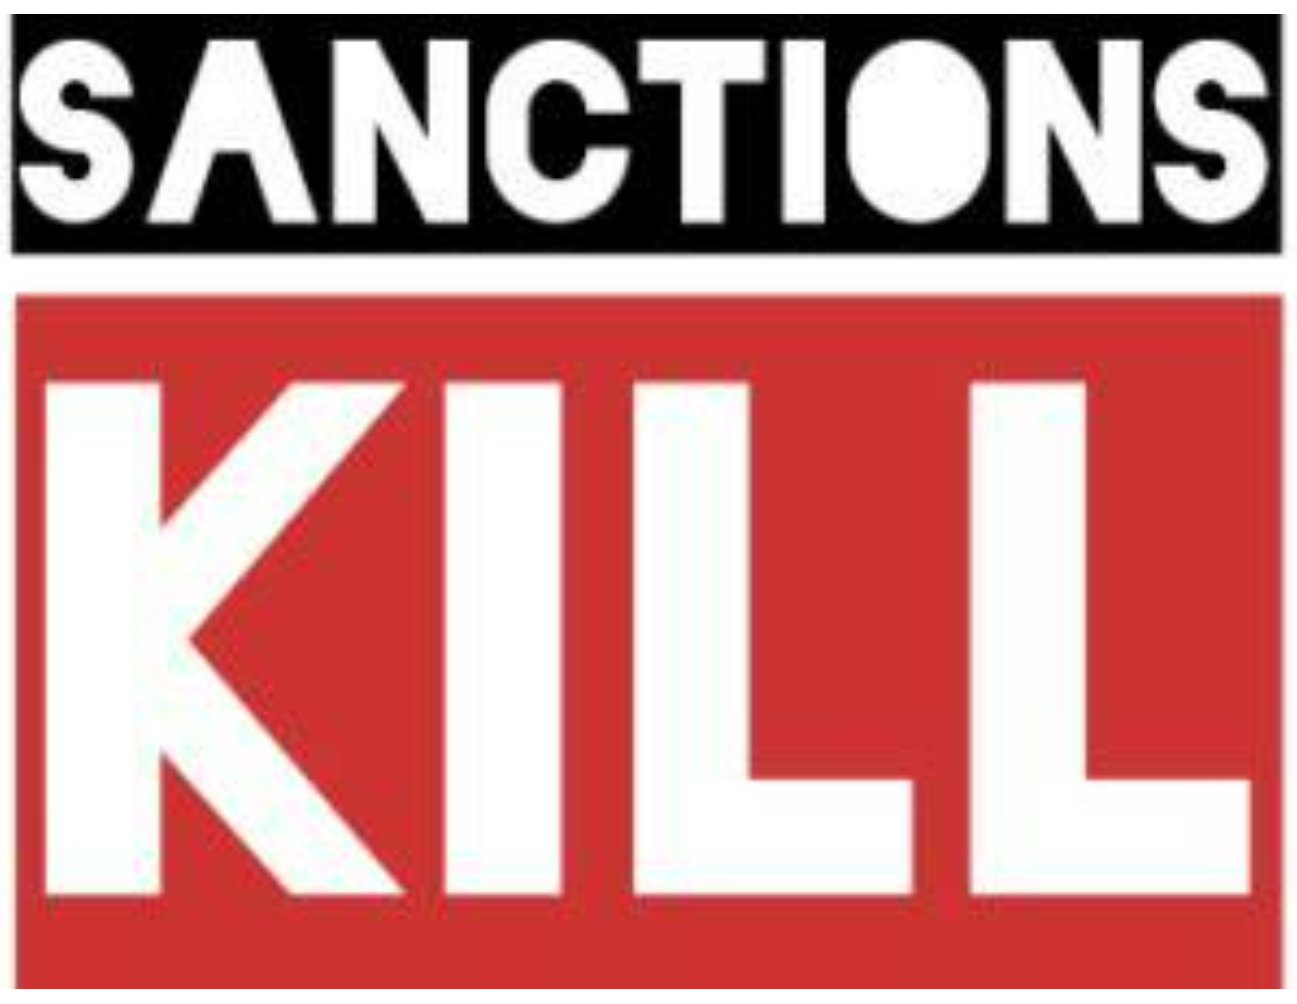 sanction kill